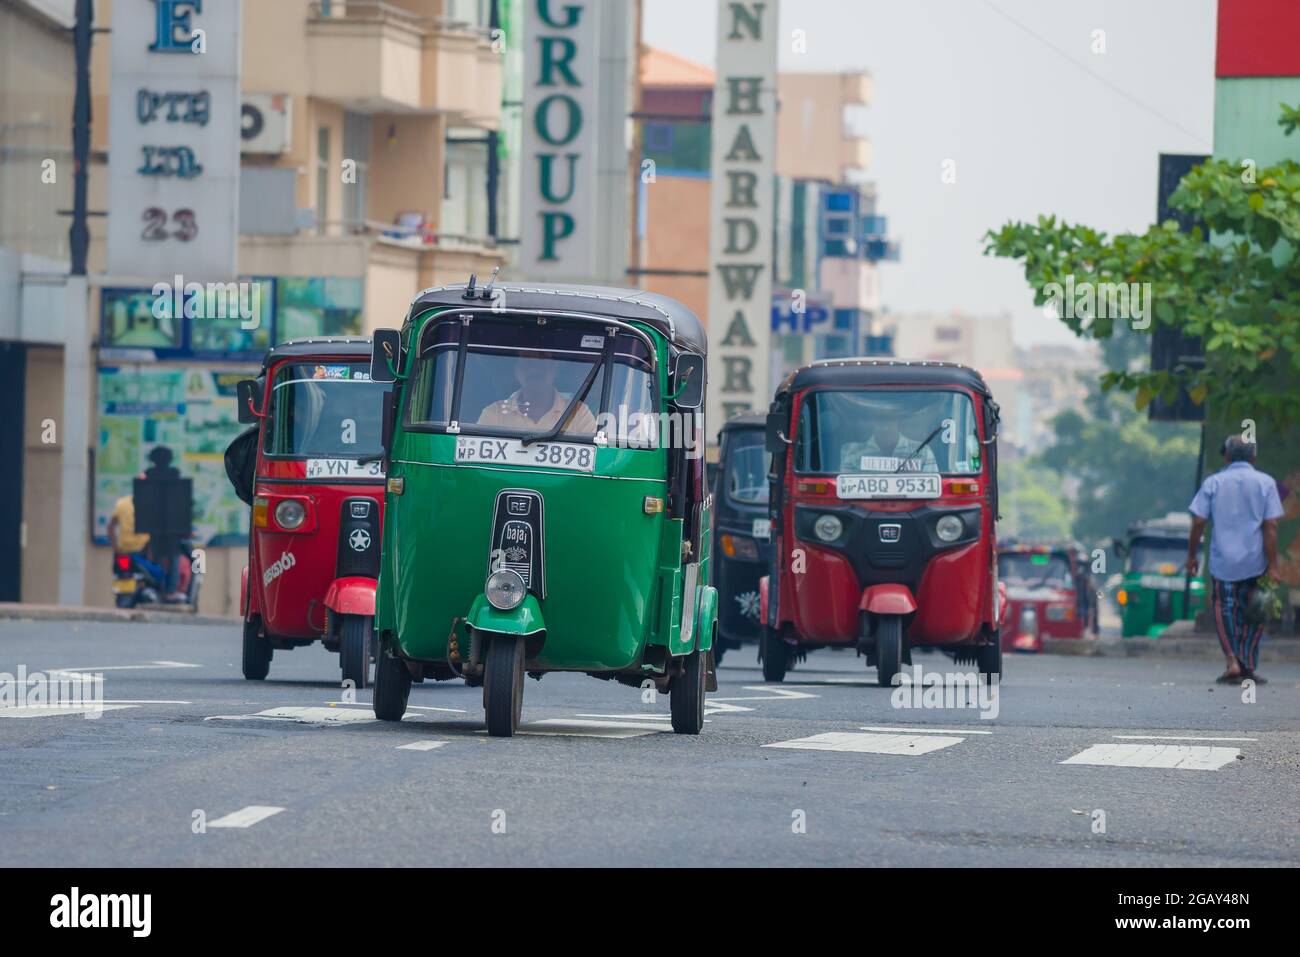 COLOMBO, SRI LANKA - FEBRUARY 23, 2020: Several tuk-tuks in traffic on a city street Stock Photo